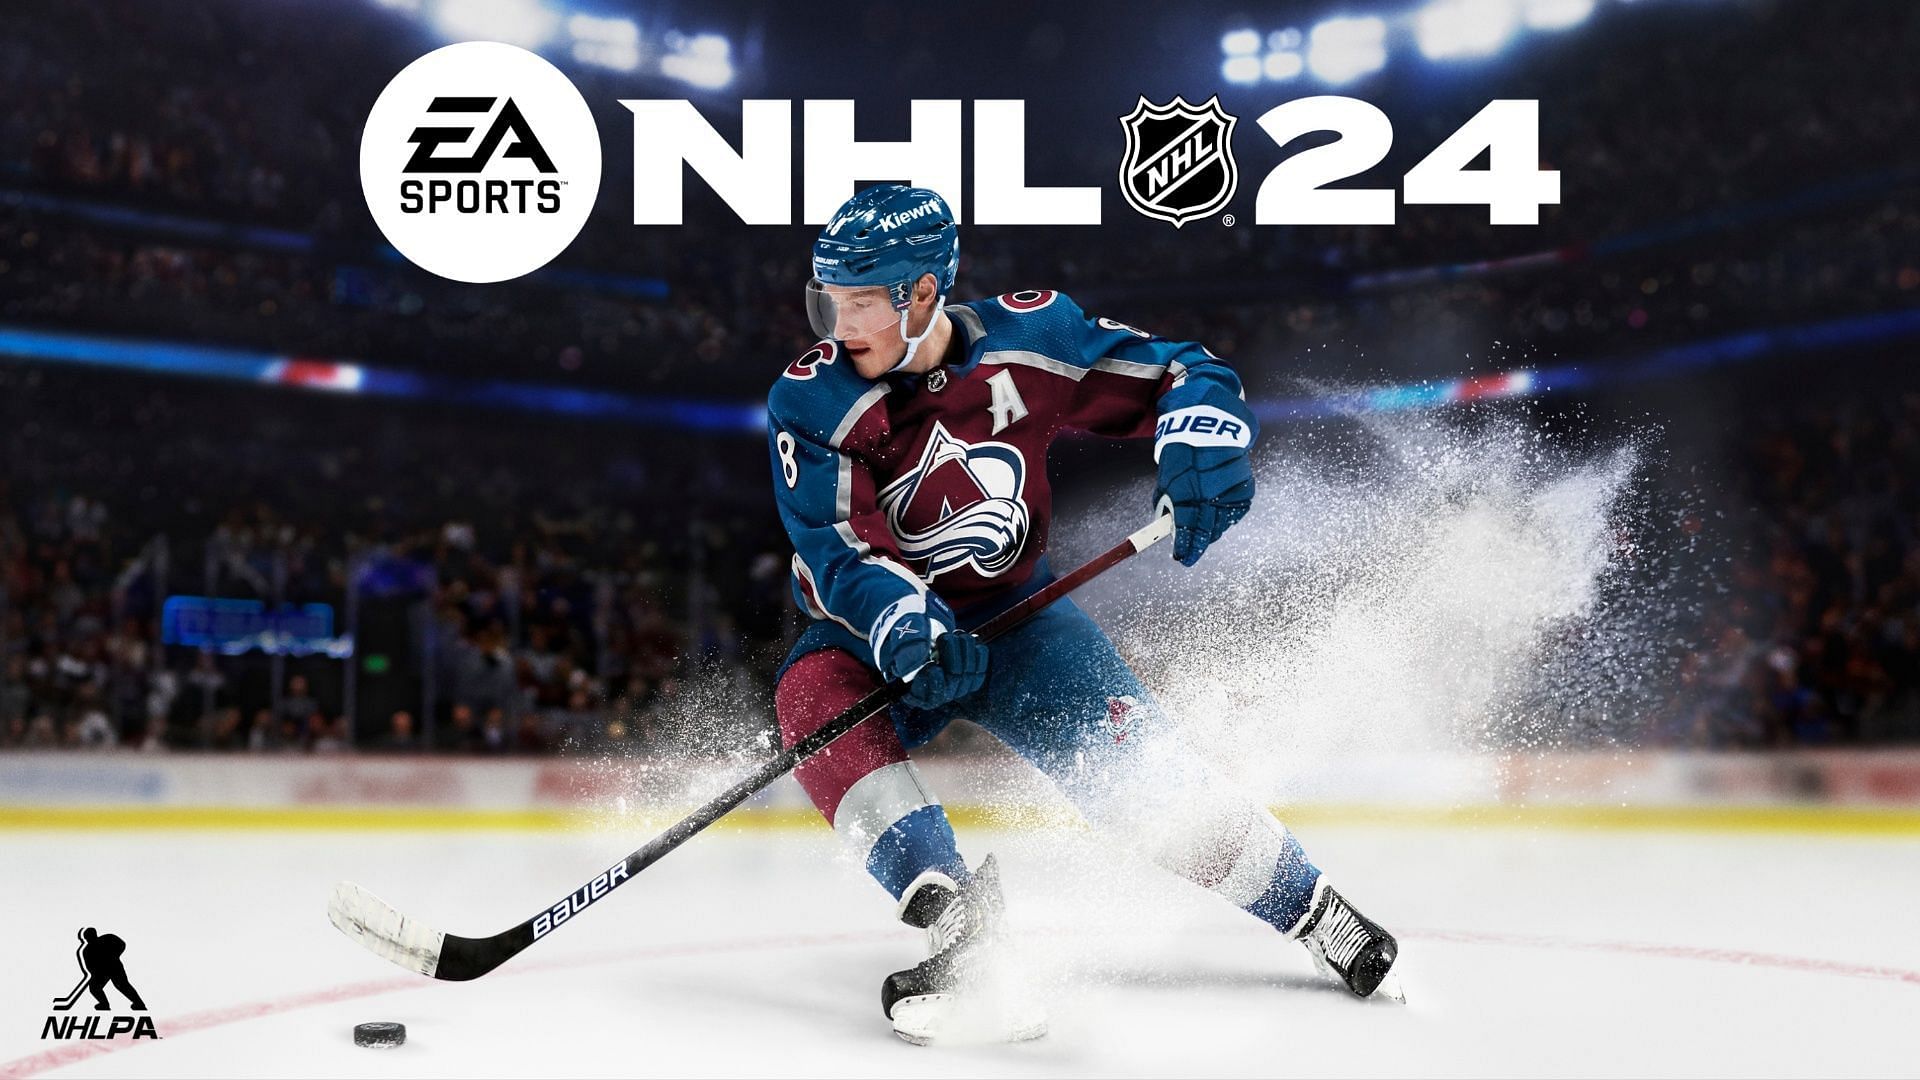 Cale Makar, cover star of NHL 24 (Image via EA Sports)